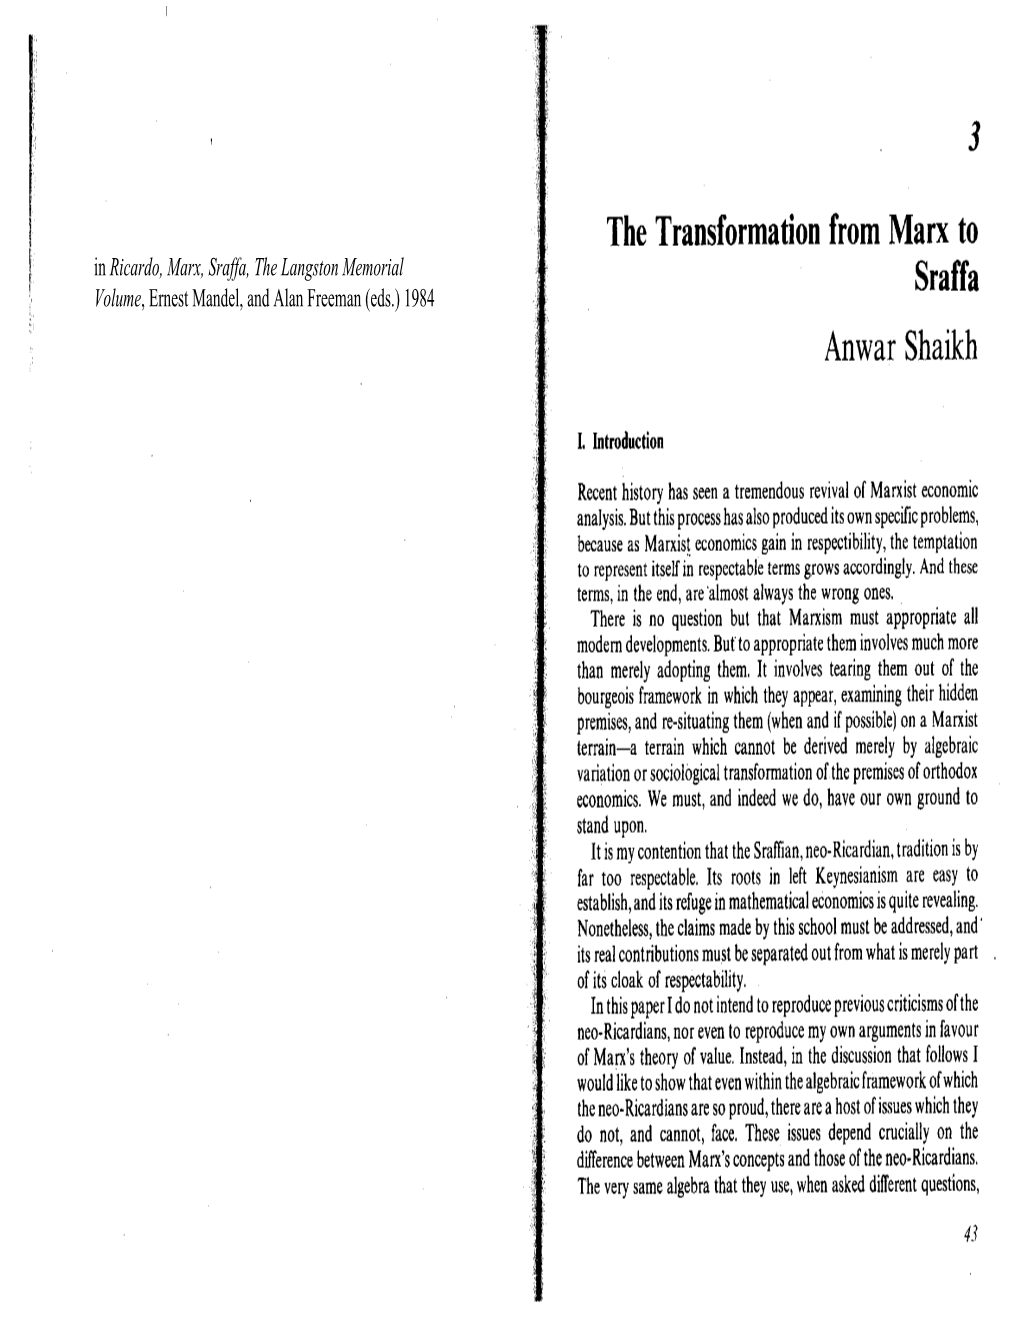 The Transformation from Marx to Sraffa Anwar Shaikh